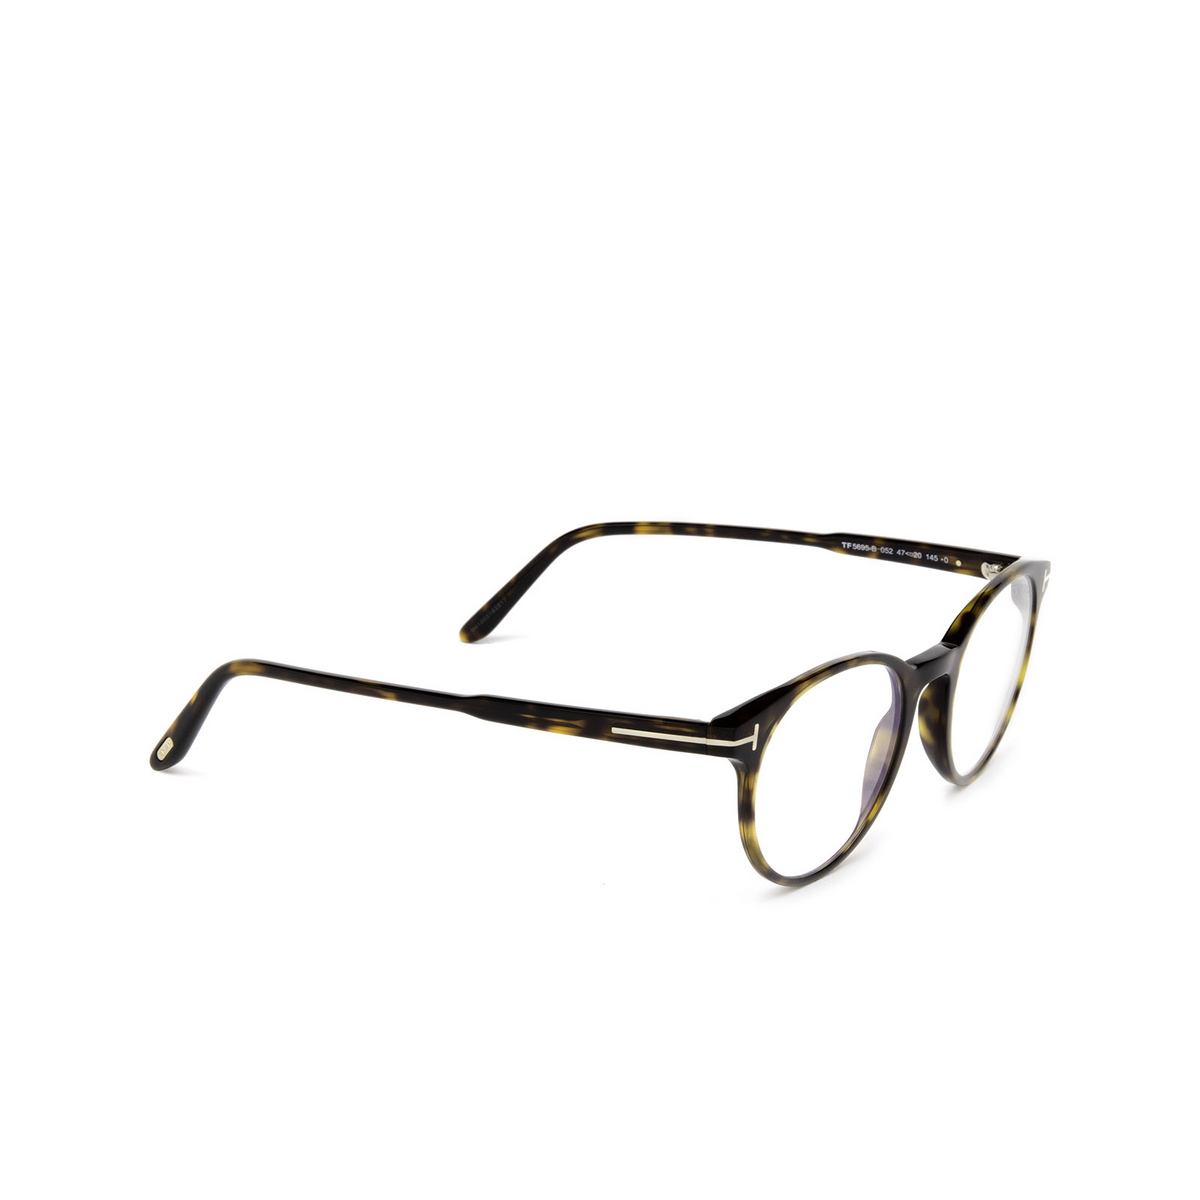 Tom Ford® Round Eyeglasses: FT5695-B color Dark Havana 052 - three-quarters view.